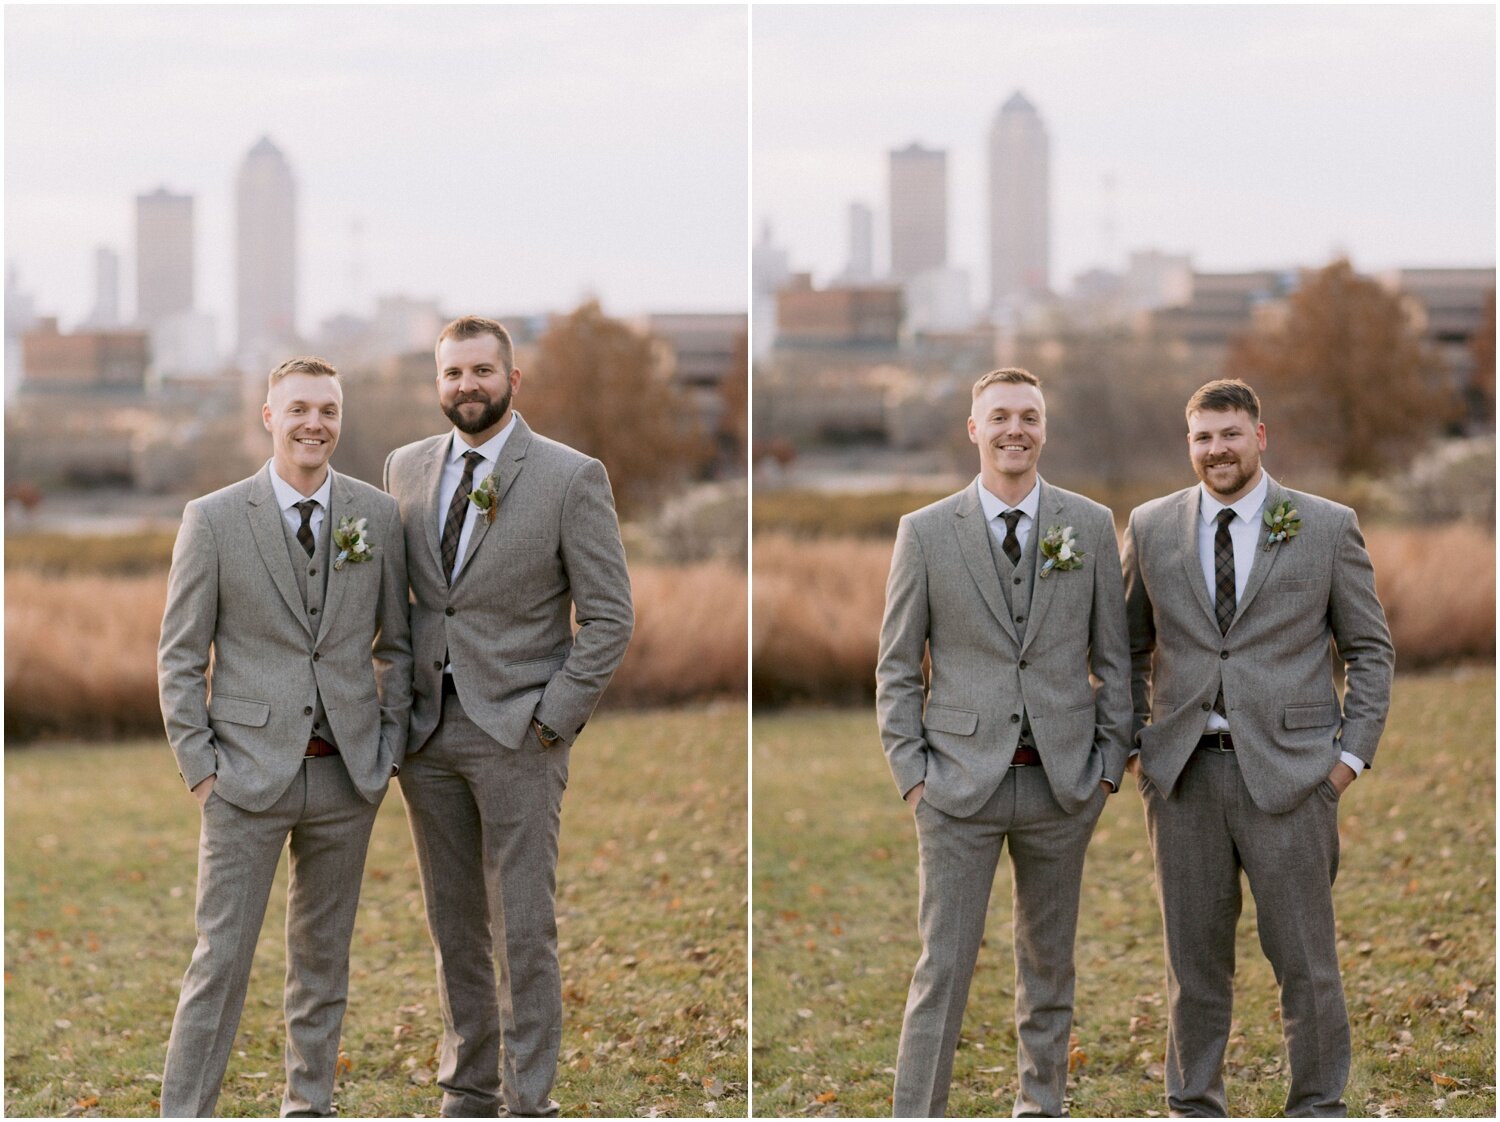 Andrew Ferren Photography - Des Moines Iowa Wedding Photographer - Destination - Engagement - Videography - Videographer - The River Center54.jpg